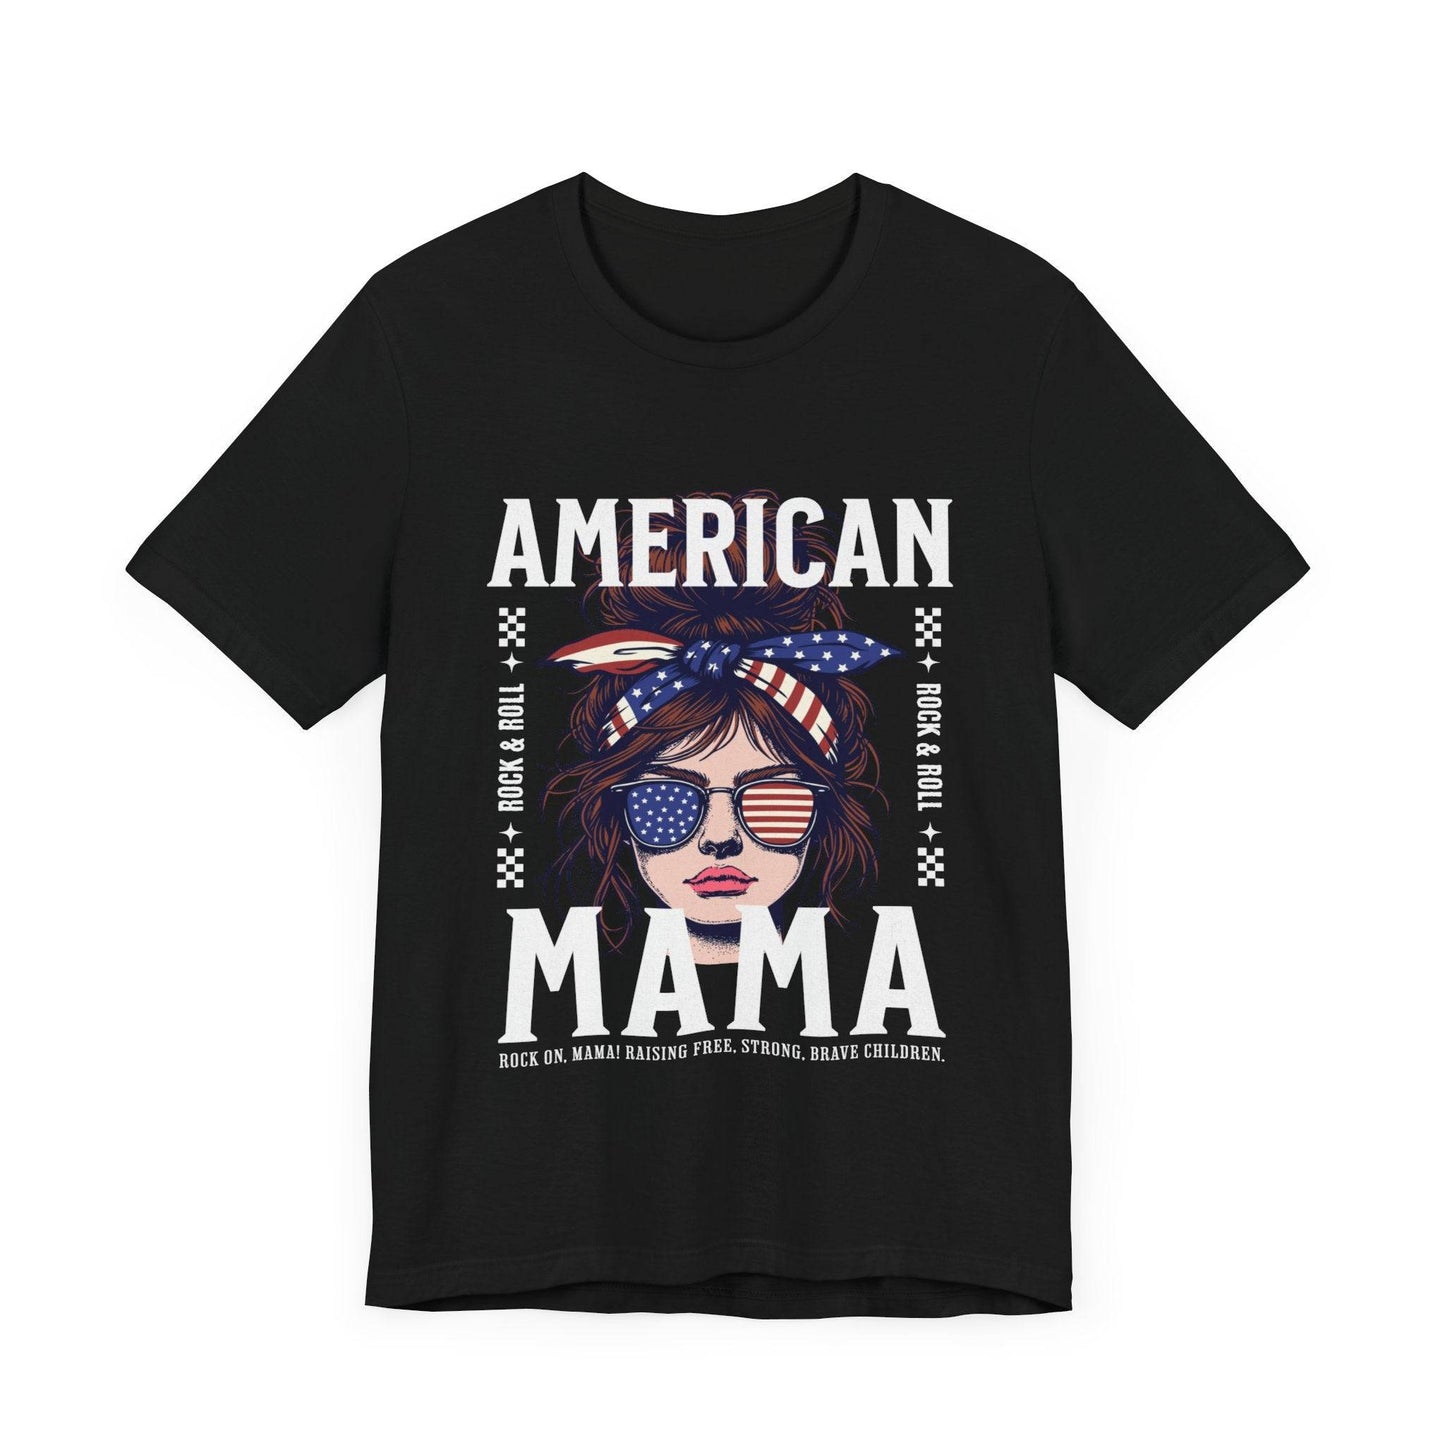 American Mama Rock n Roll Shirt for Women